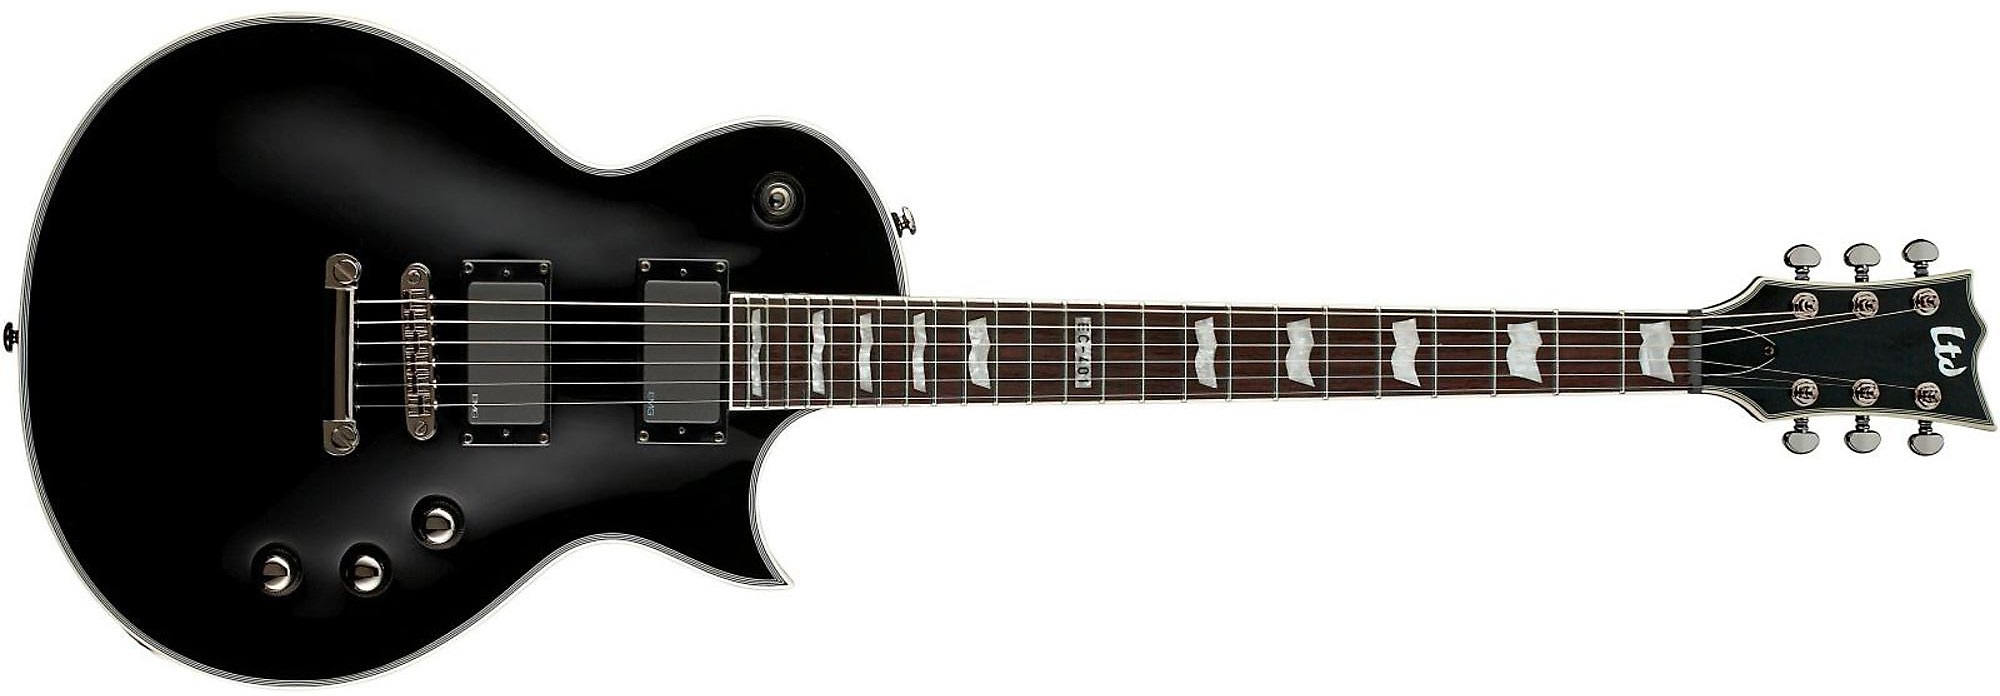 ESP LTD EC-401 Electric Guitar on a white background